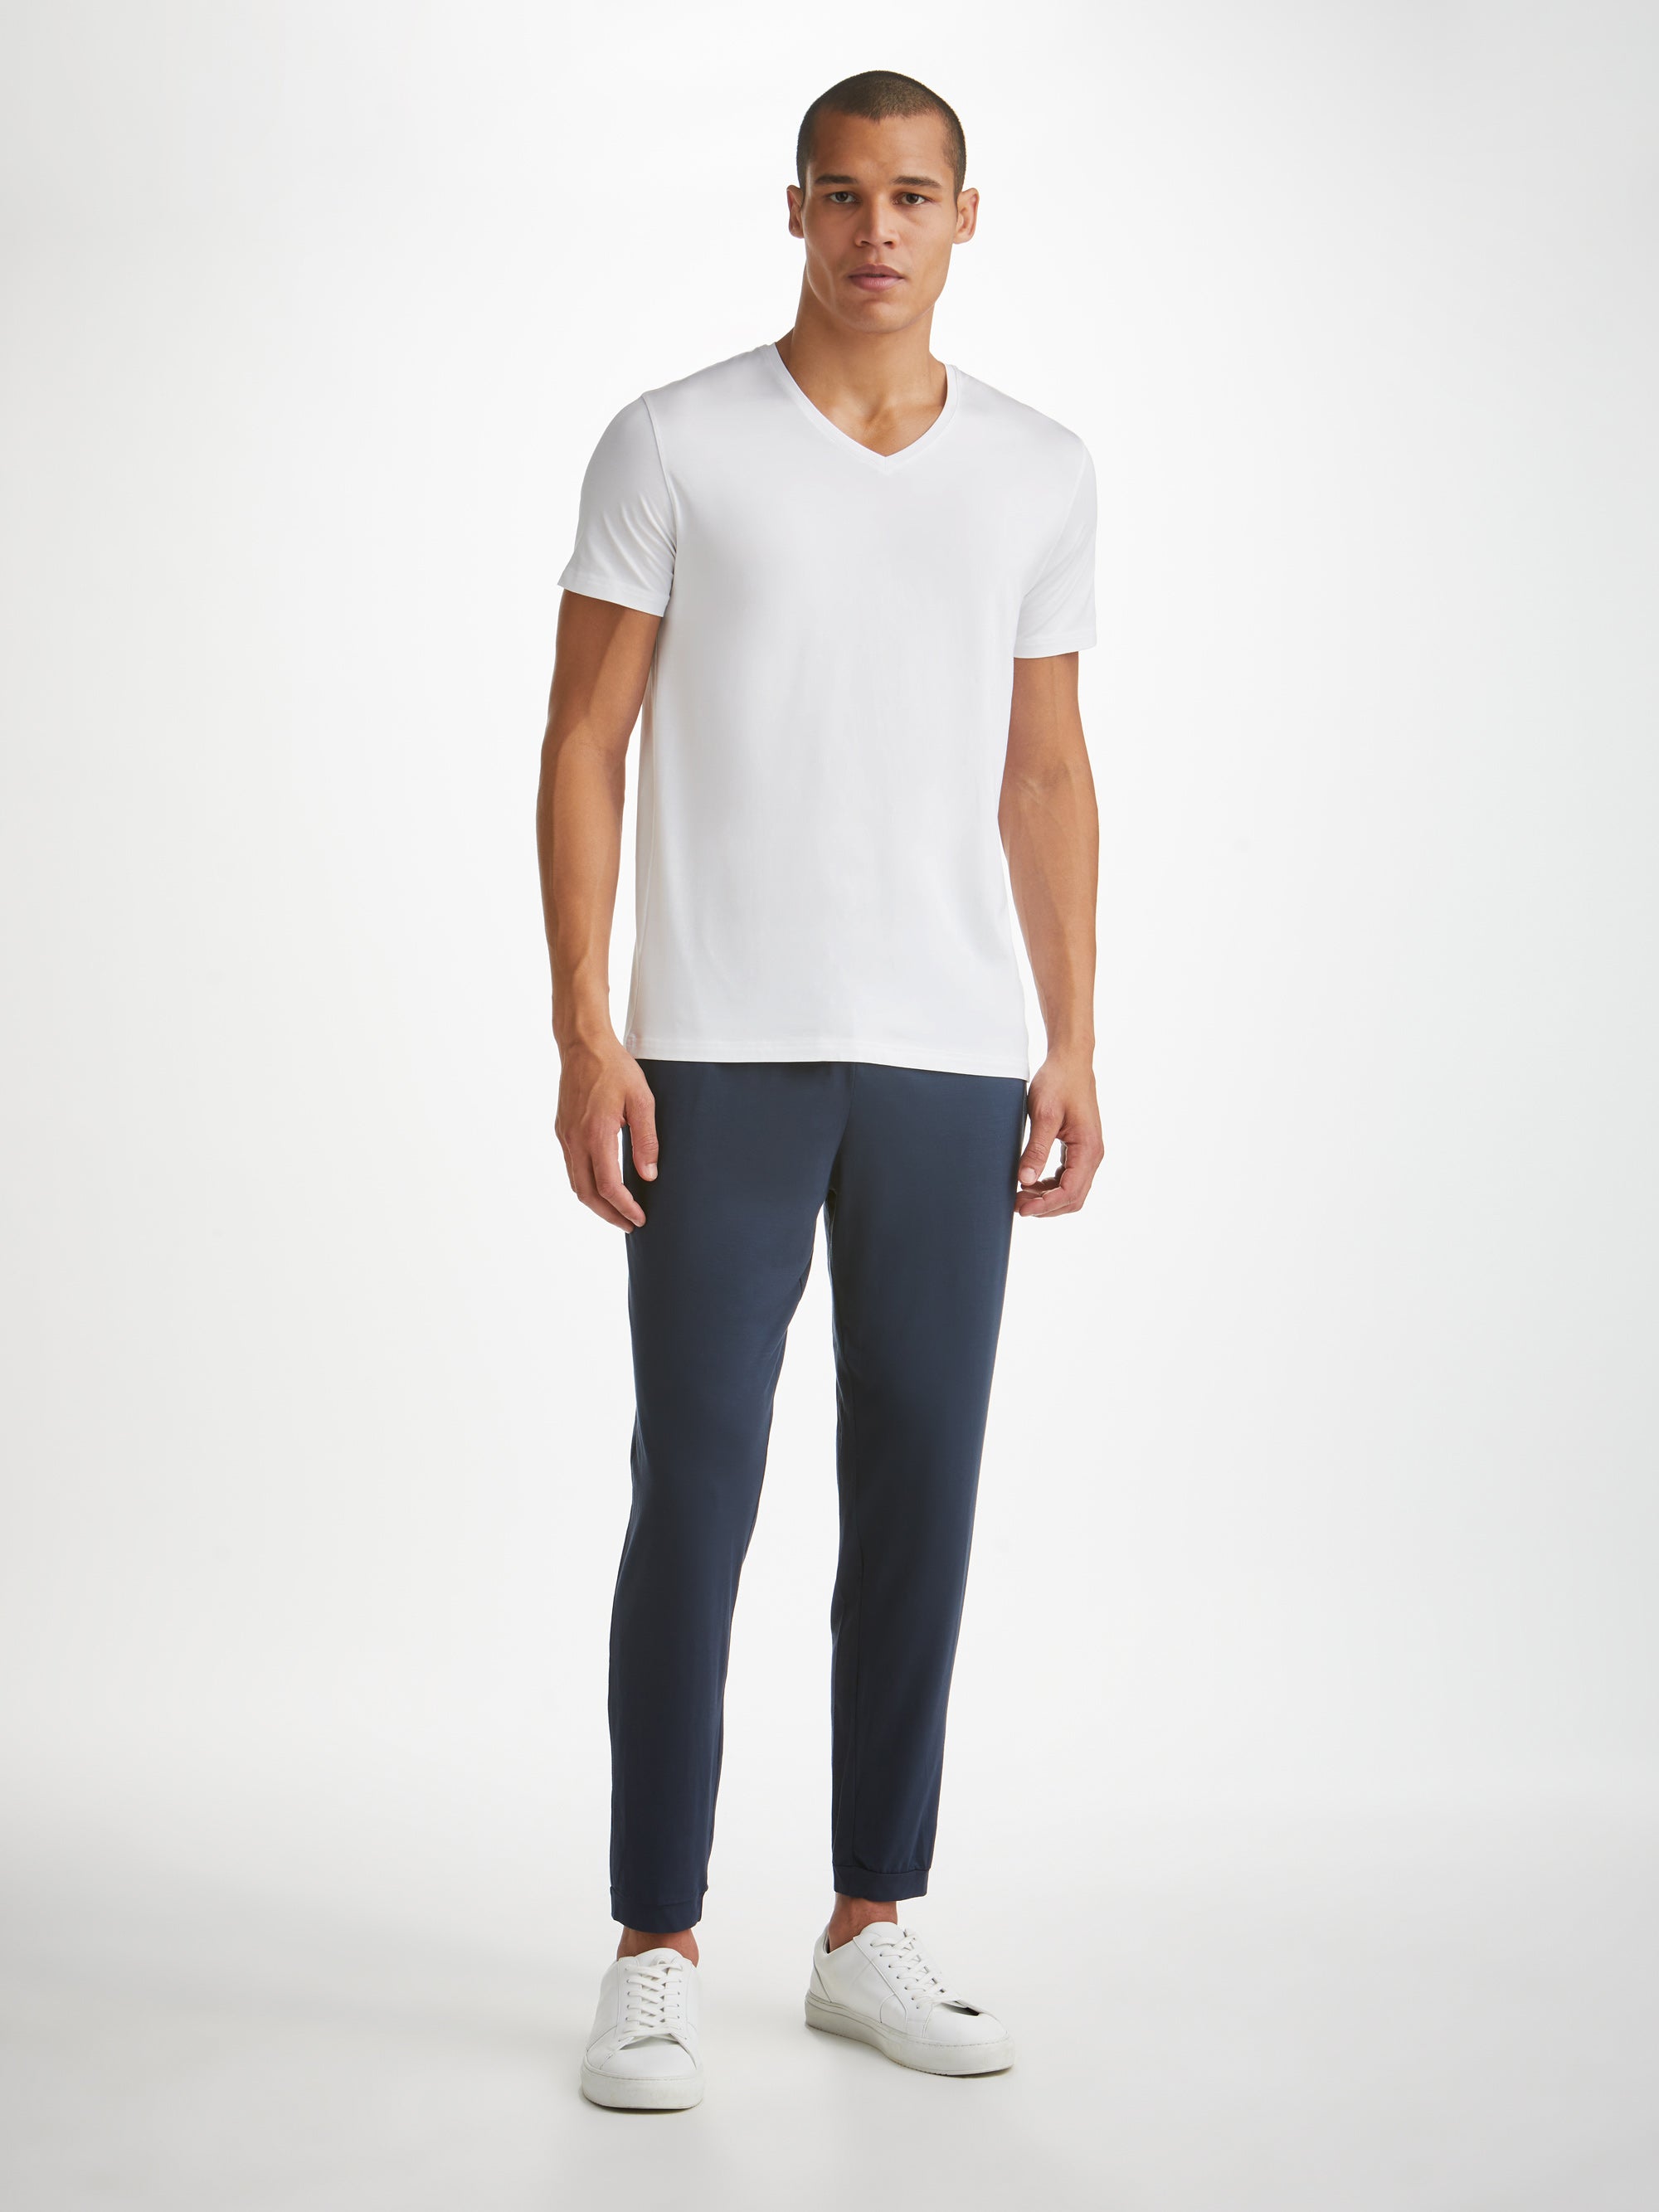 Men's V-Neck T-Shirt Basel Micro Modal Stretch White